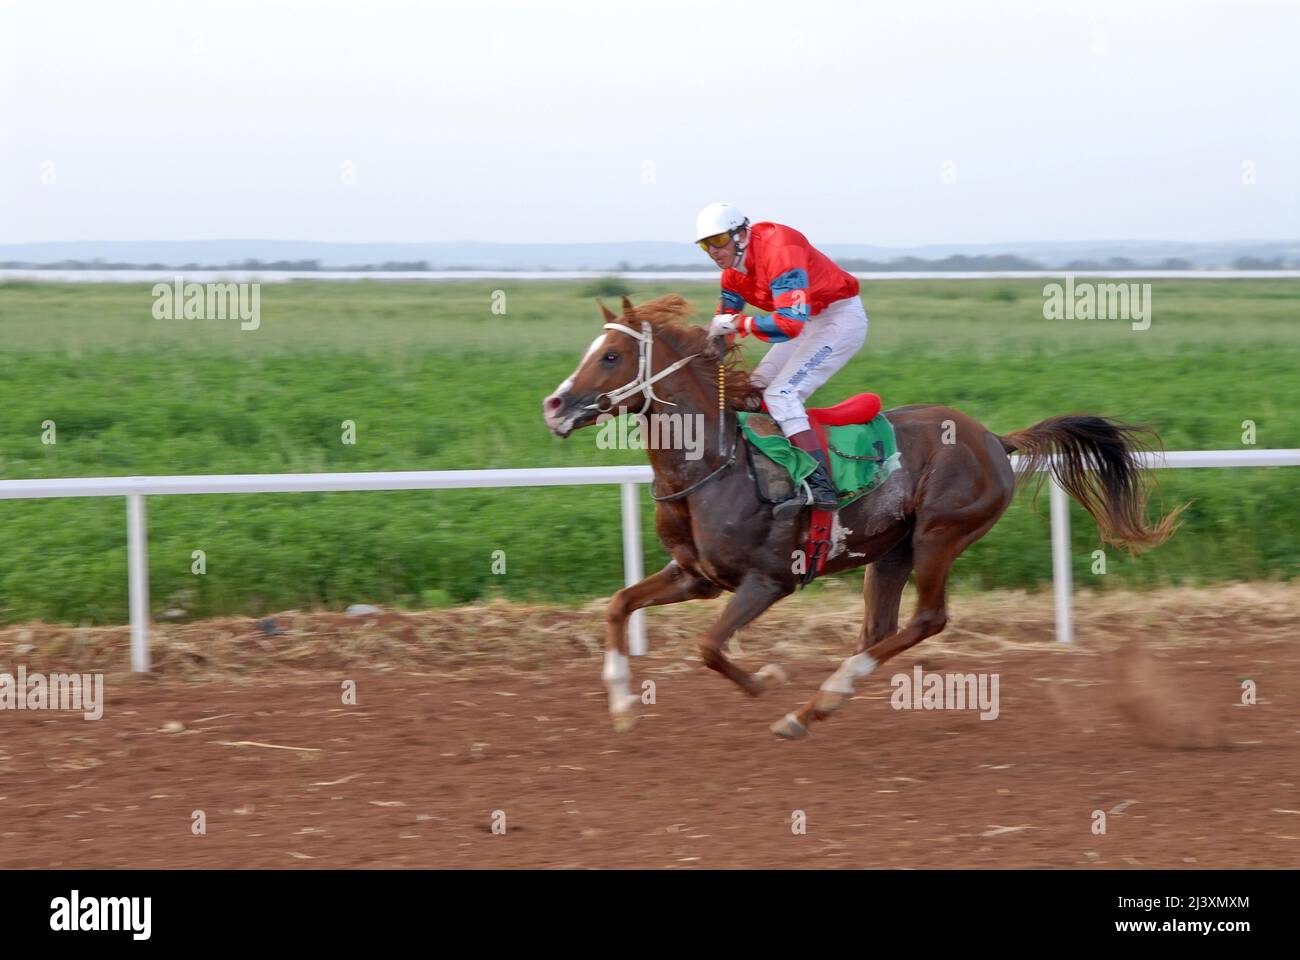 Horse race Stock Photo